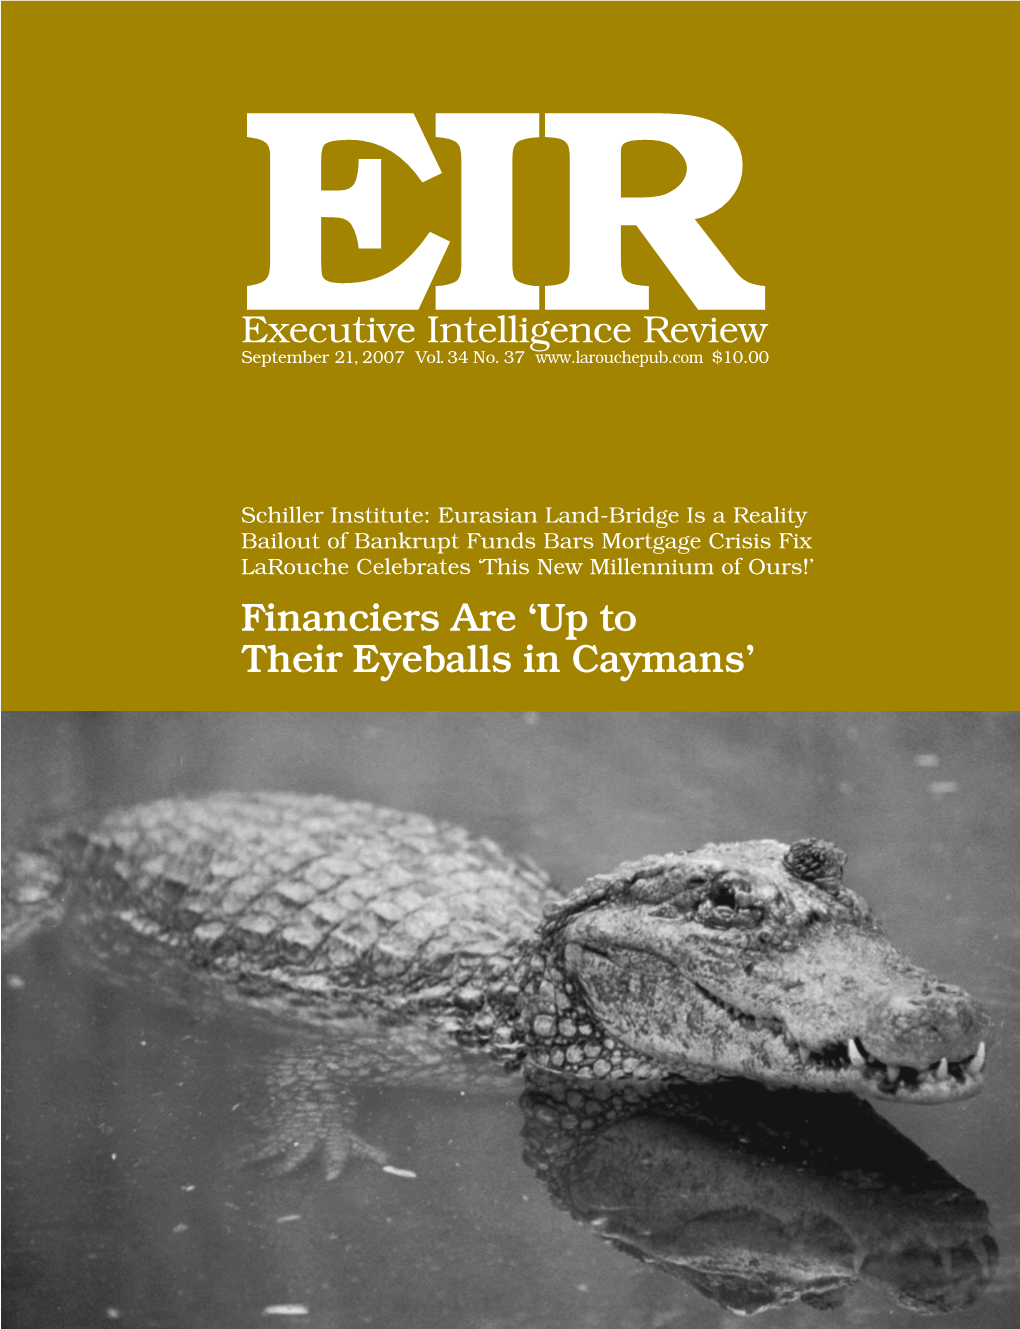 Executive Intelligence Review, Volume 34, Number 37, September